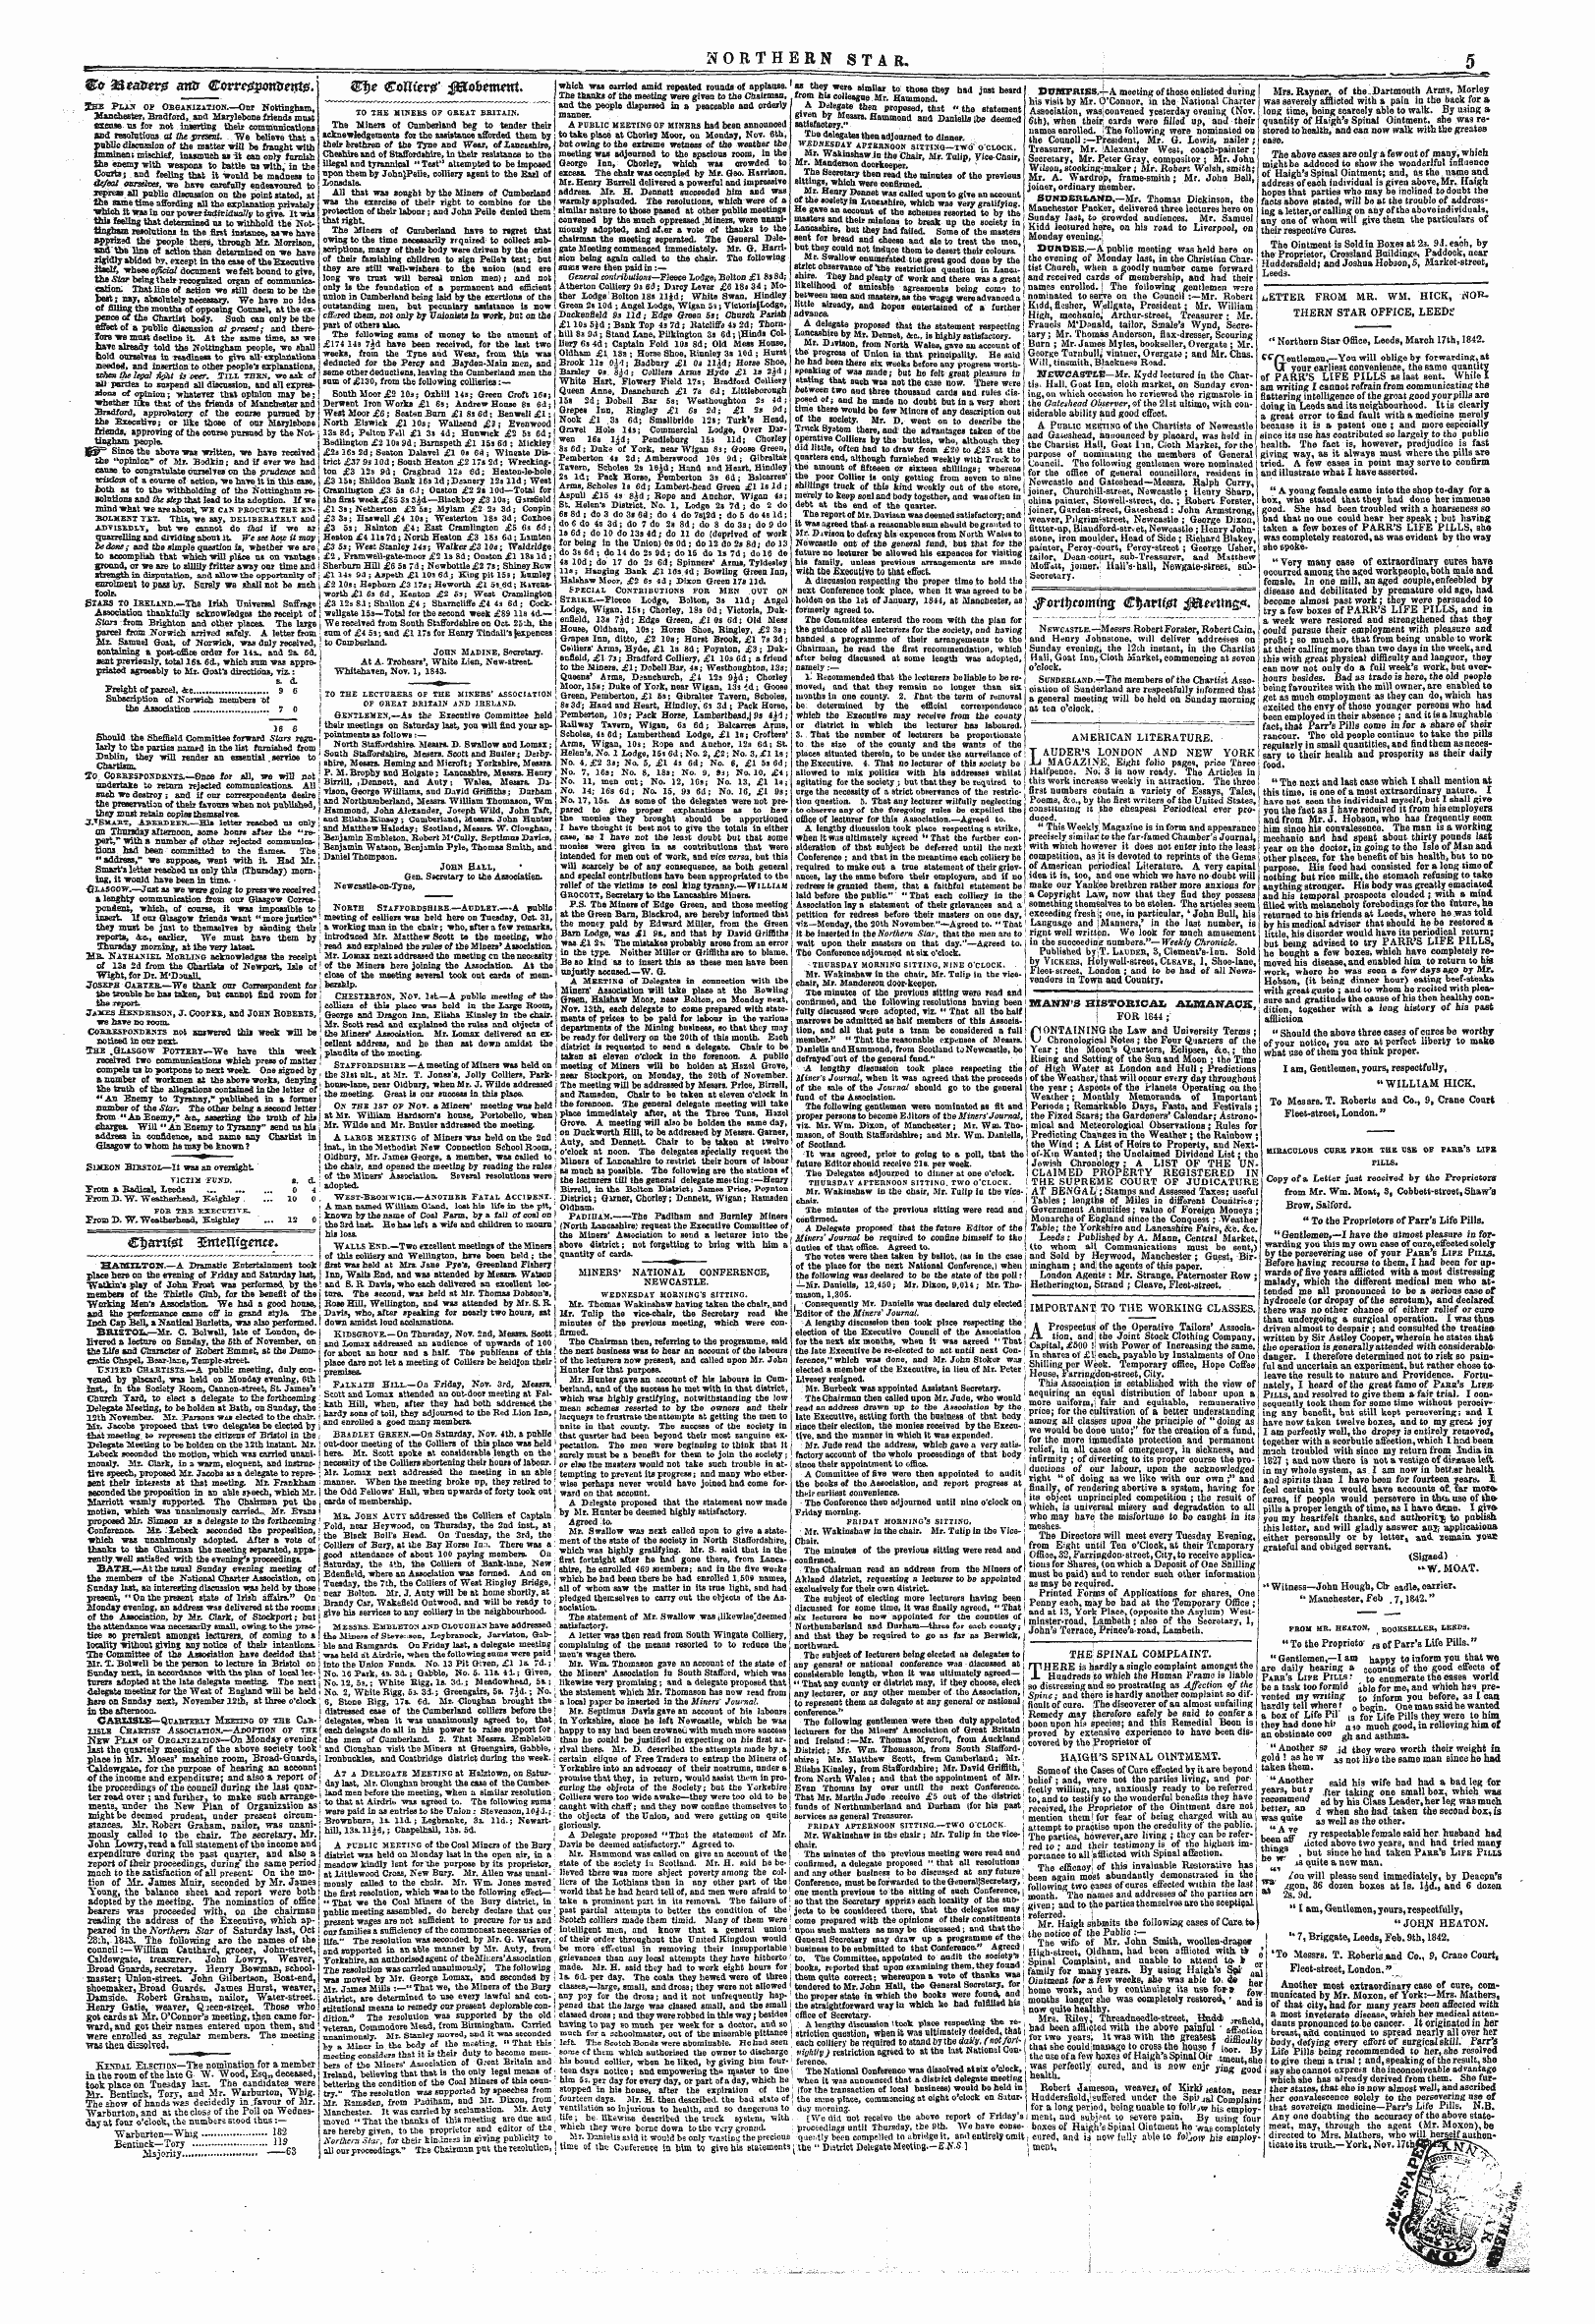 Northern Star (1837-1852): jS F Y, 3rd edition - Wt)T €Quier$' Jj&Qbmtnt